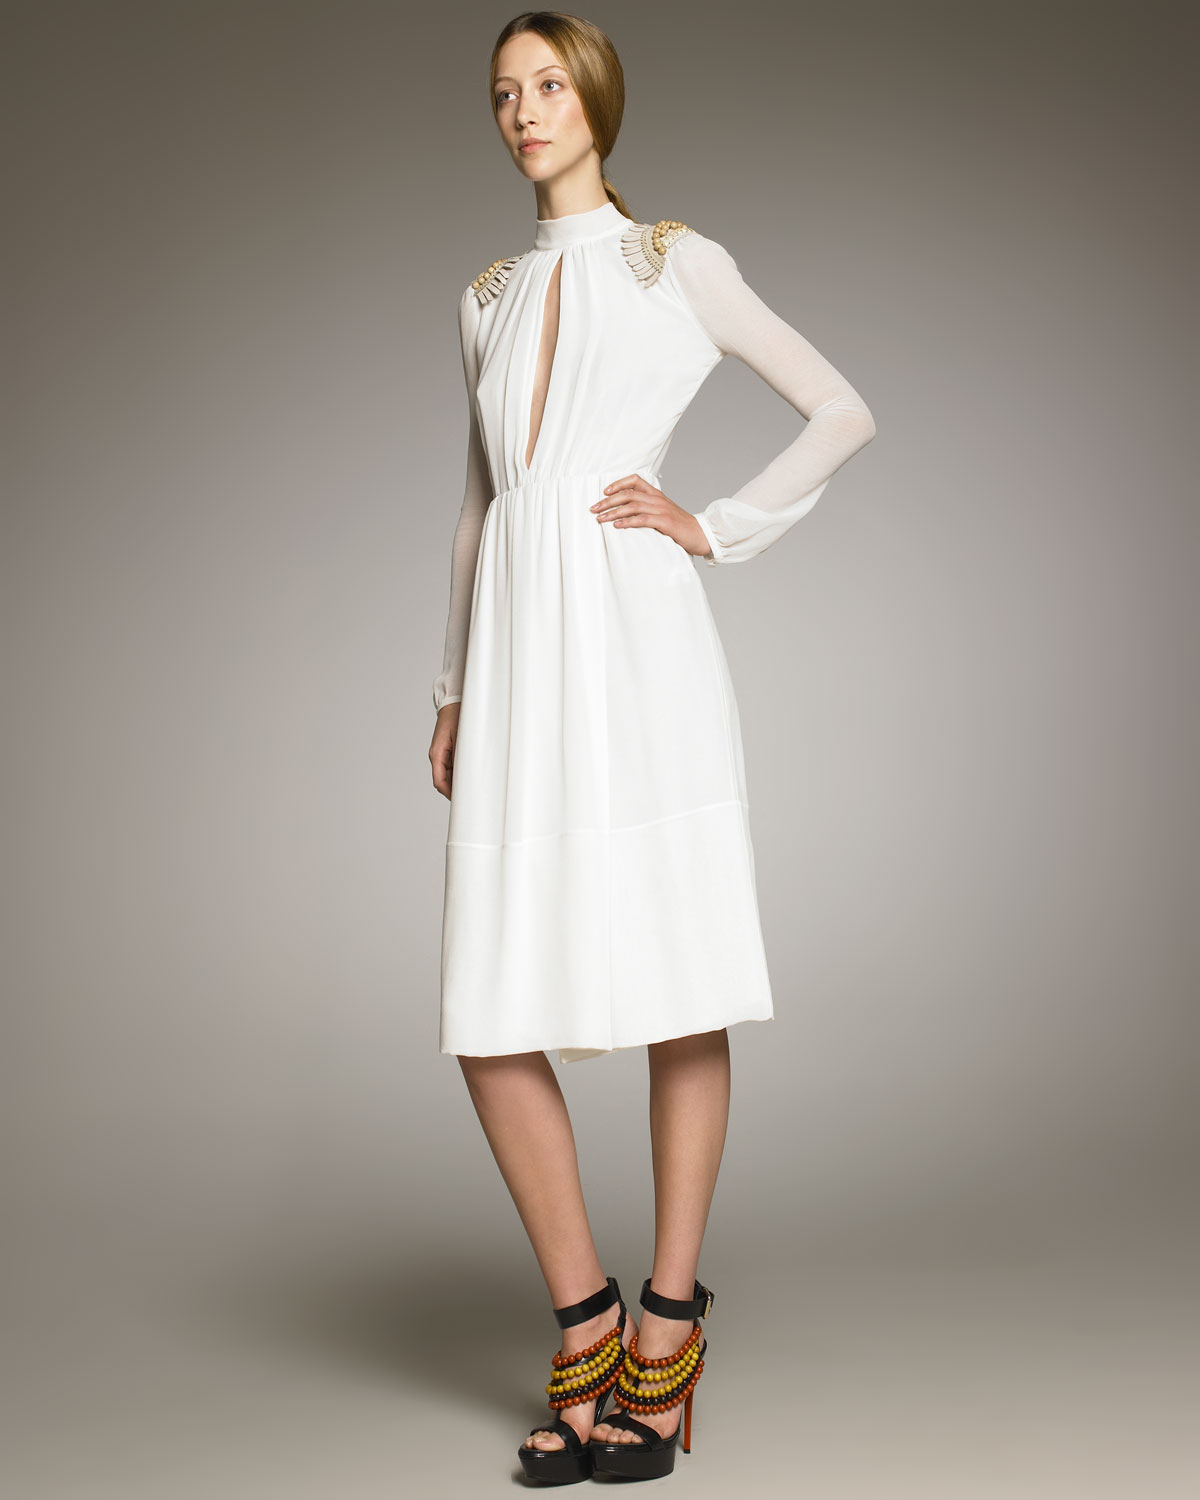 Lyst - Burberry prorsum Shoulder-detail Georgette Dress in White